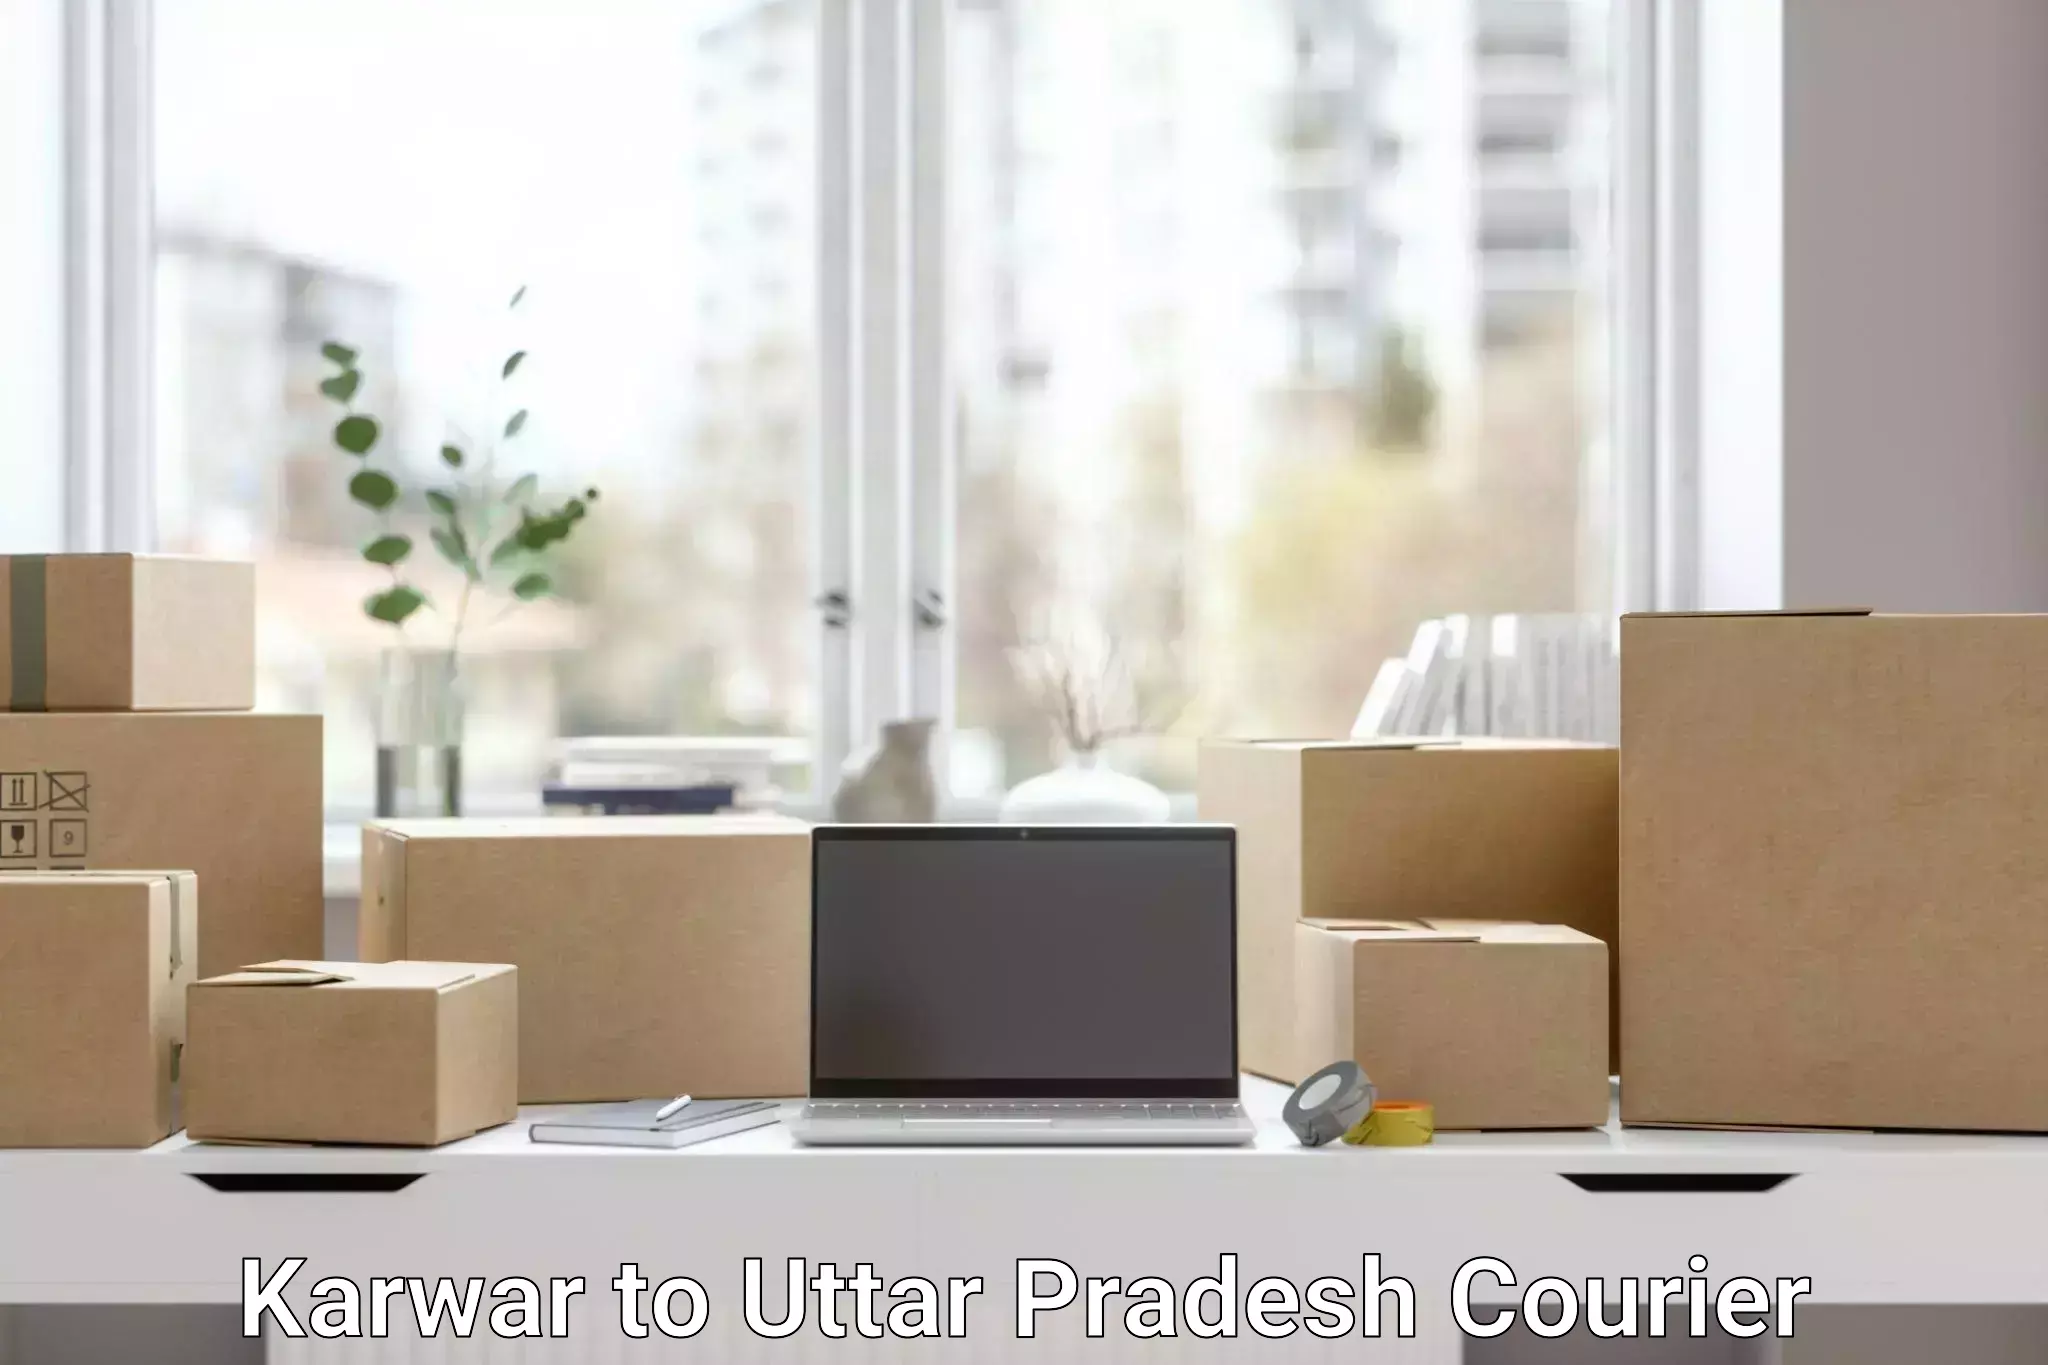 Corporate courier solutions Karwar to Shravasti